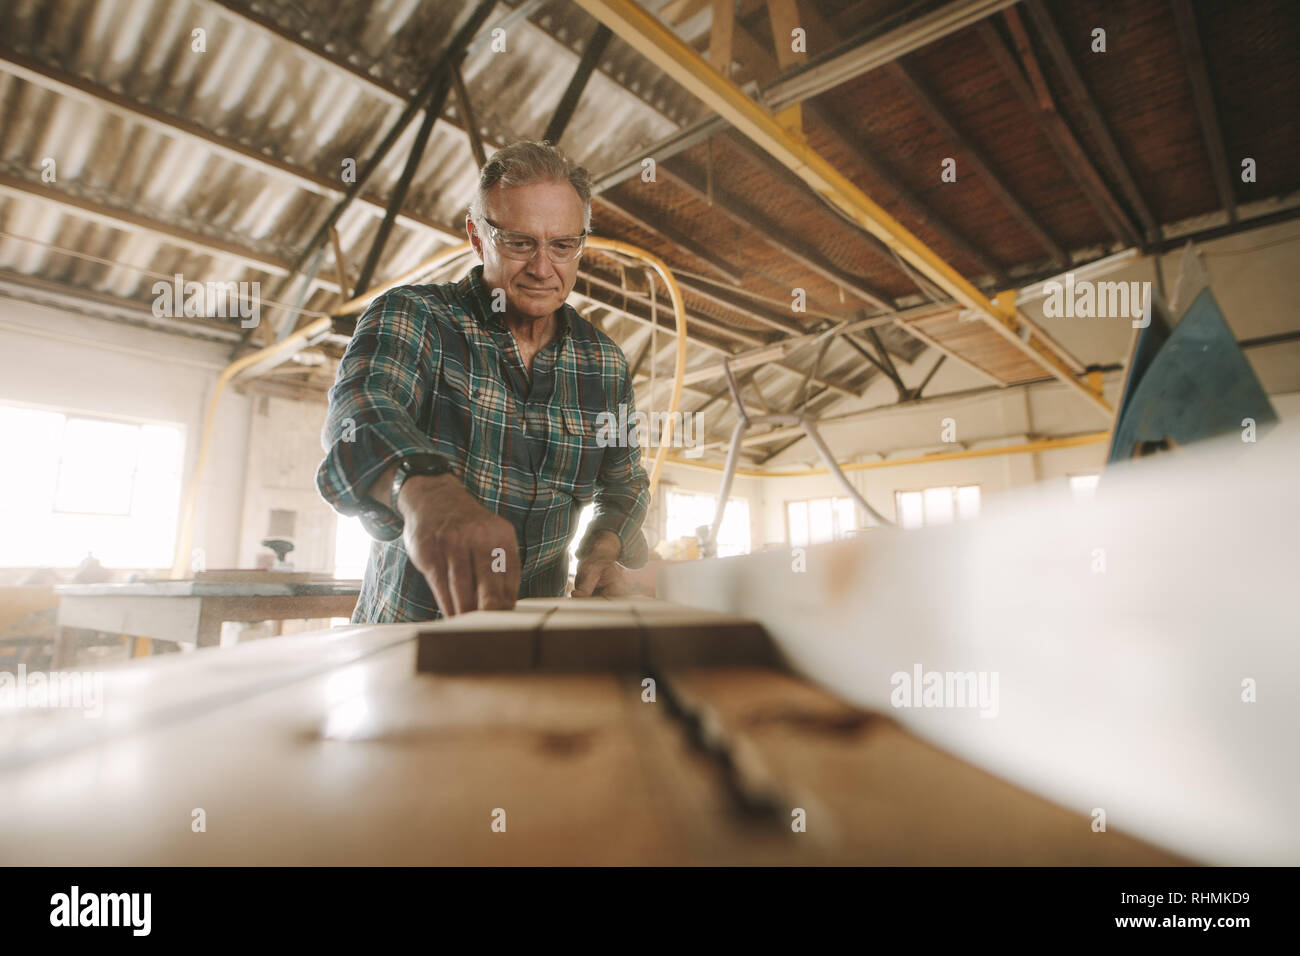 Senior male carpenter cutting wood on table saw machine. Mature caucasian man working in carpentry workshop. Stock Photo